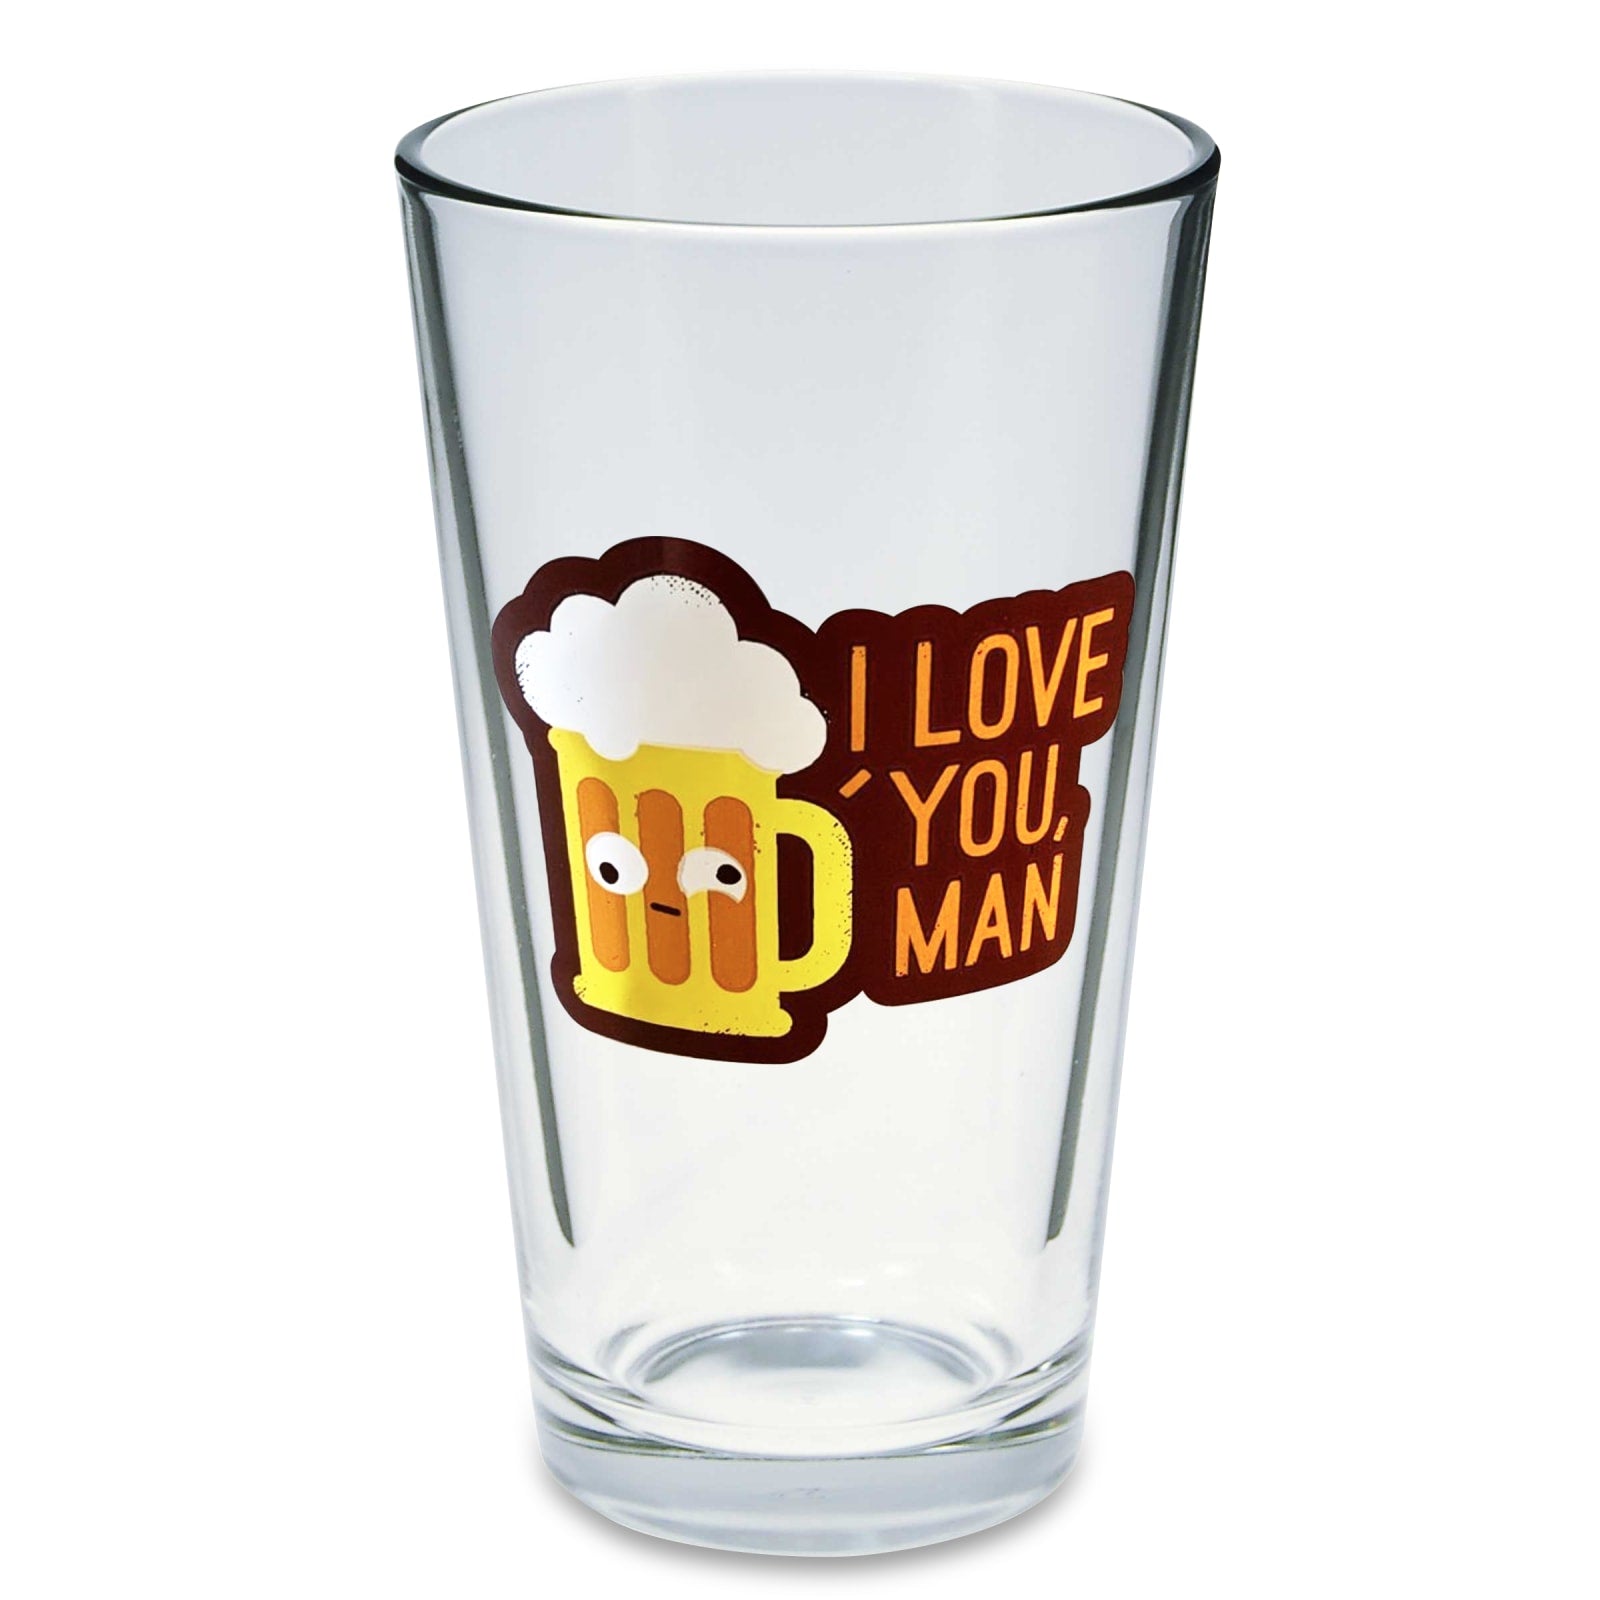 I Love You Man Pint set (2 glass - same art)